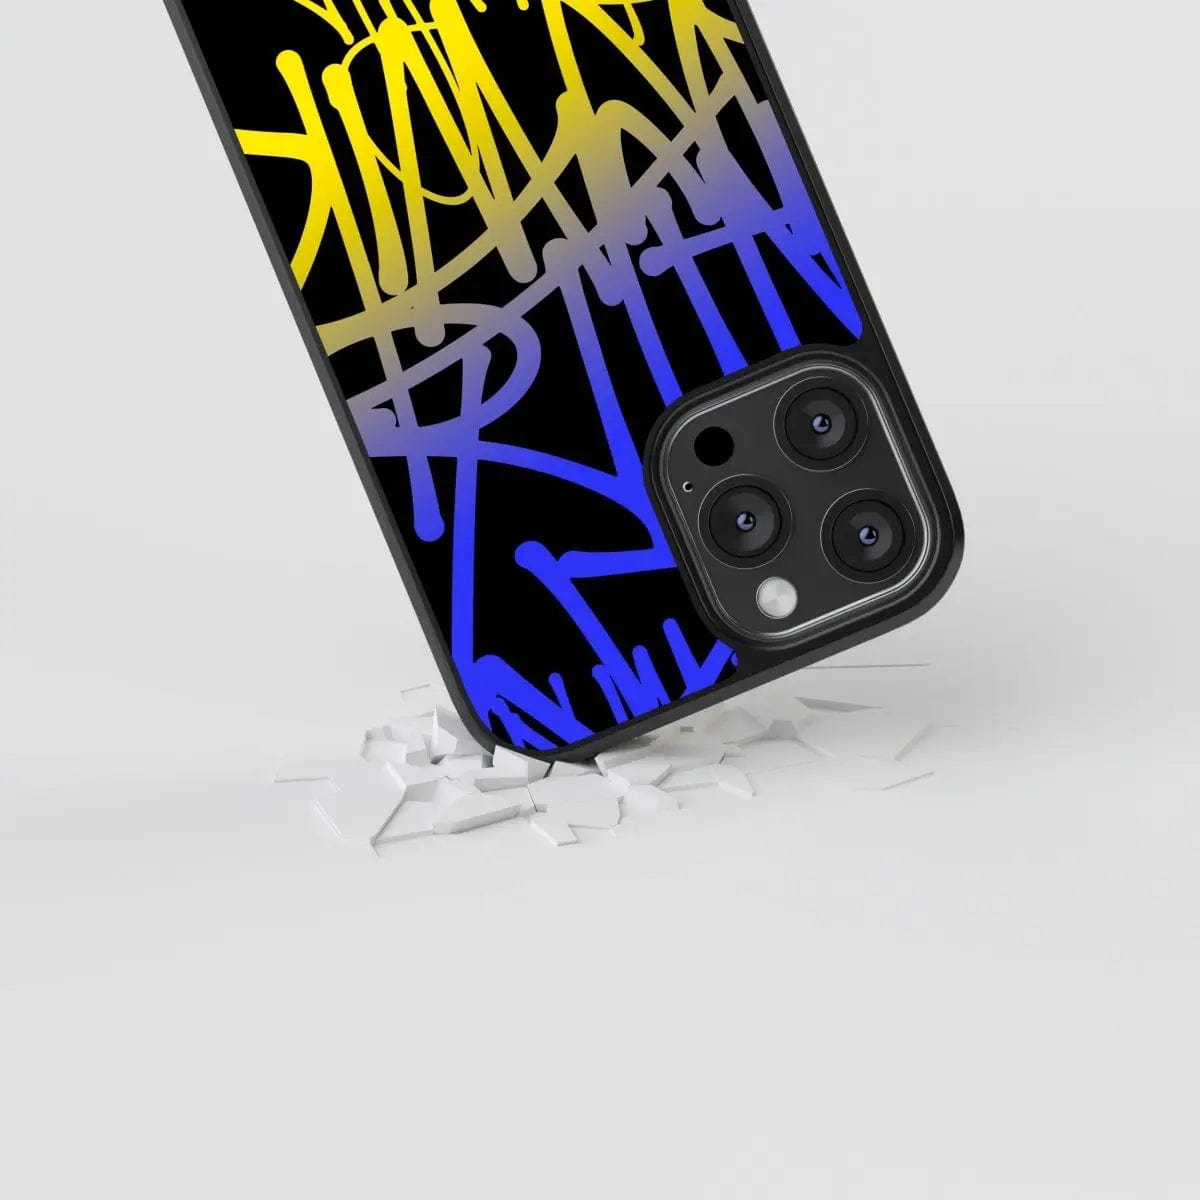 Phone case "Yellow-blue graffiti 3" - Artcase